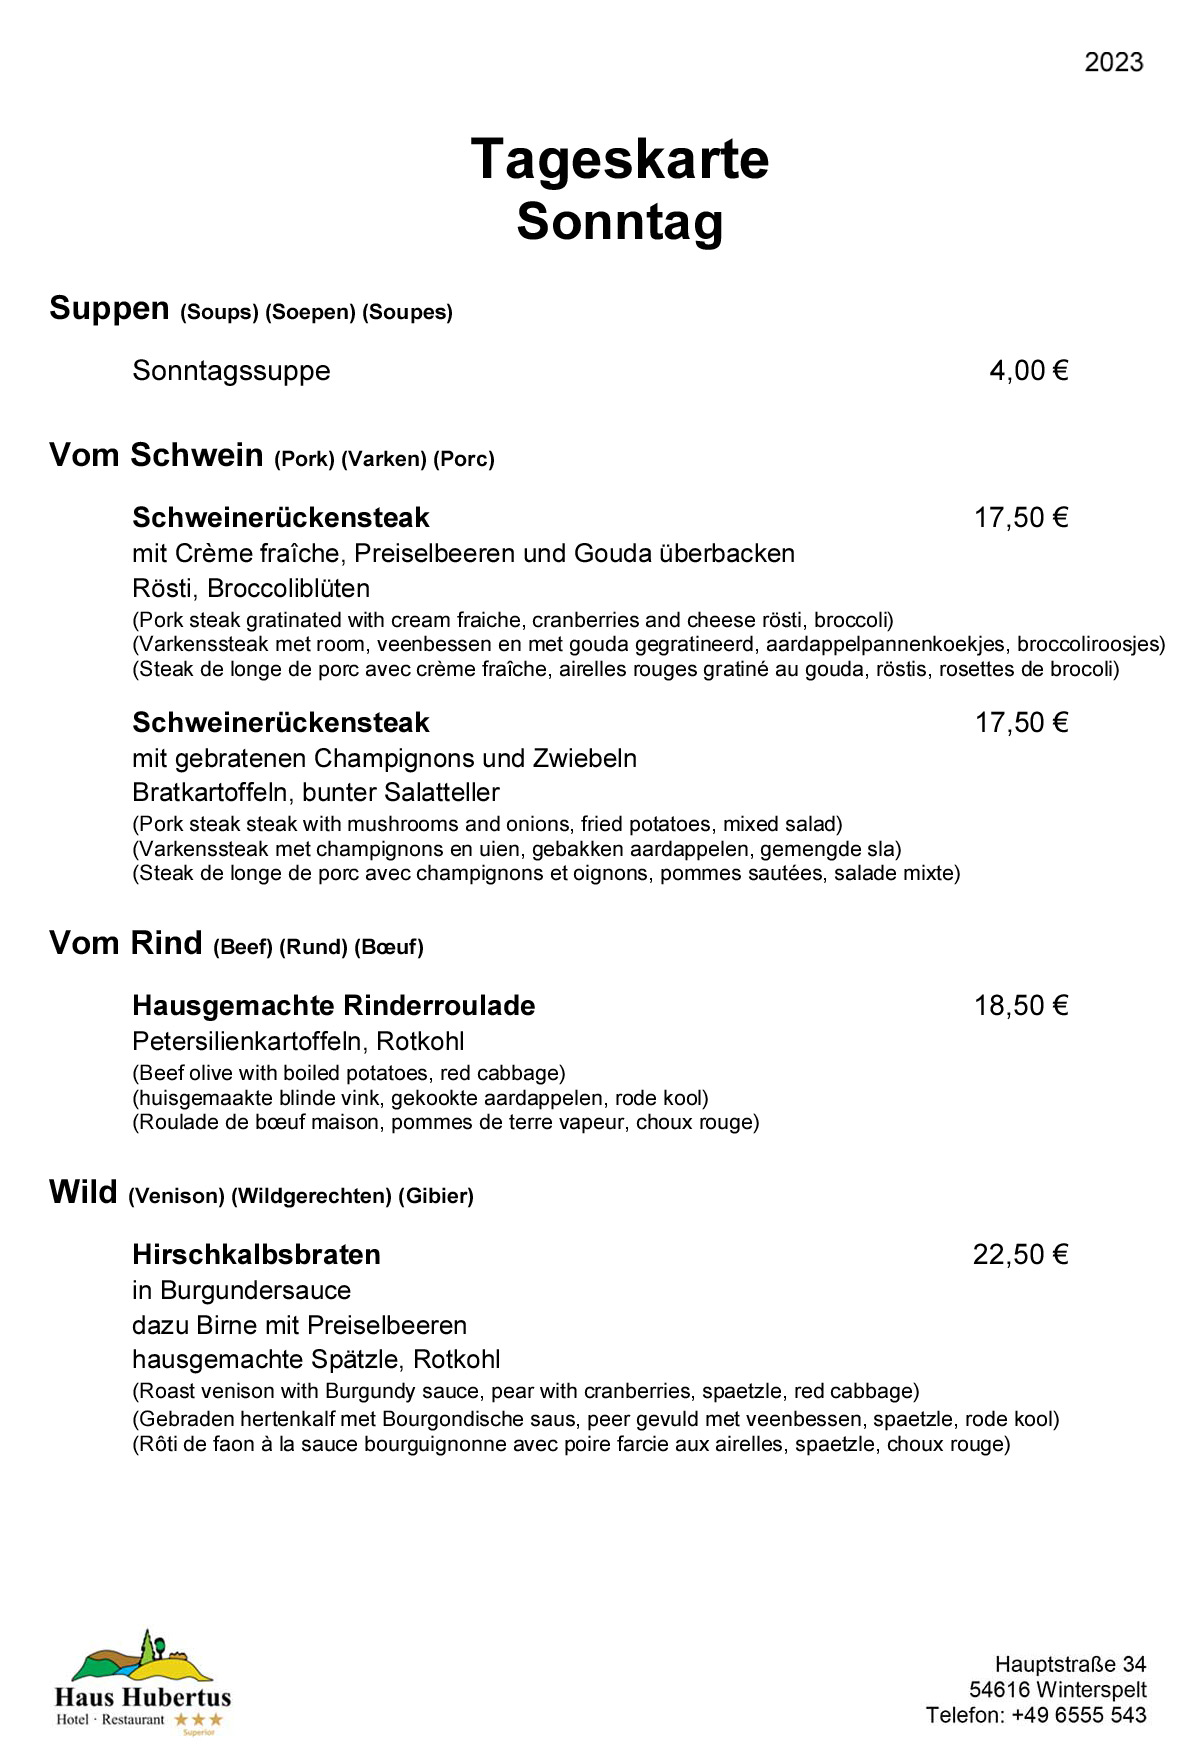 Hotel - Restaurant Haus Hubertus - Menu 02/2023 - Daily menu / Sunday